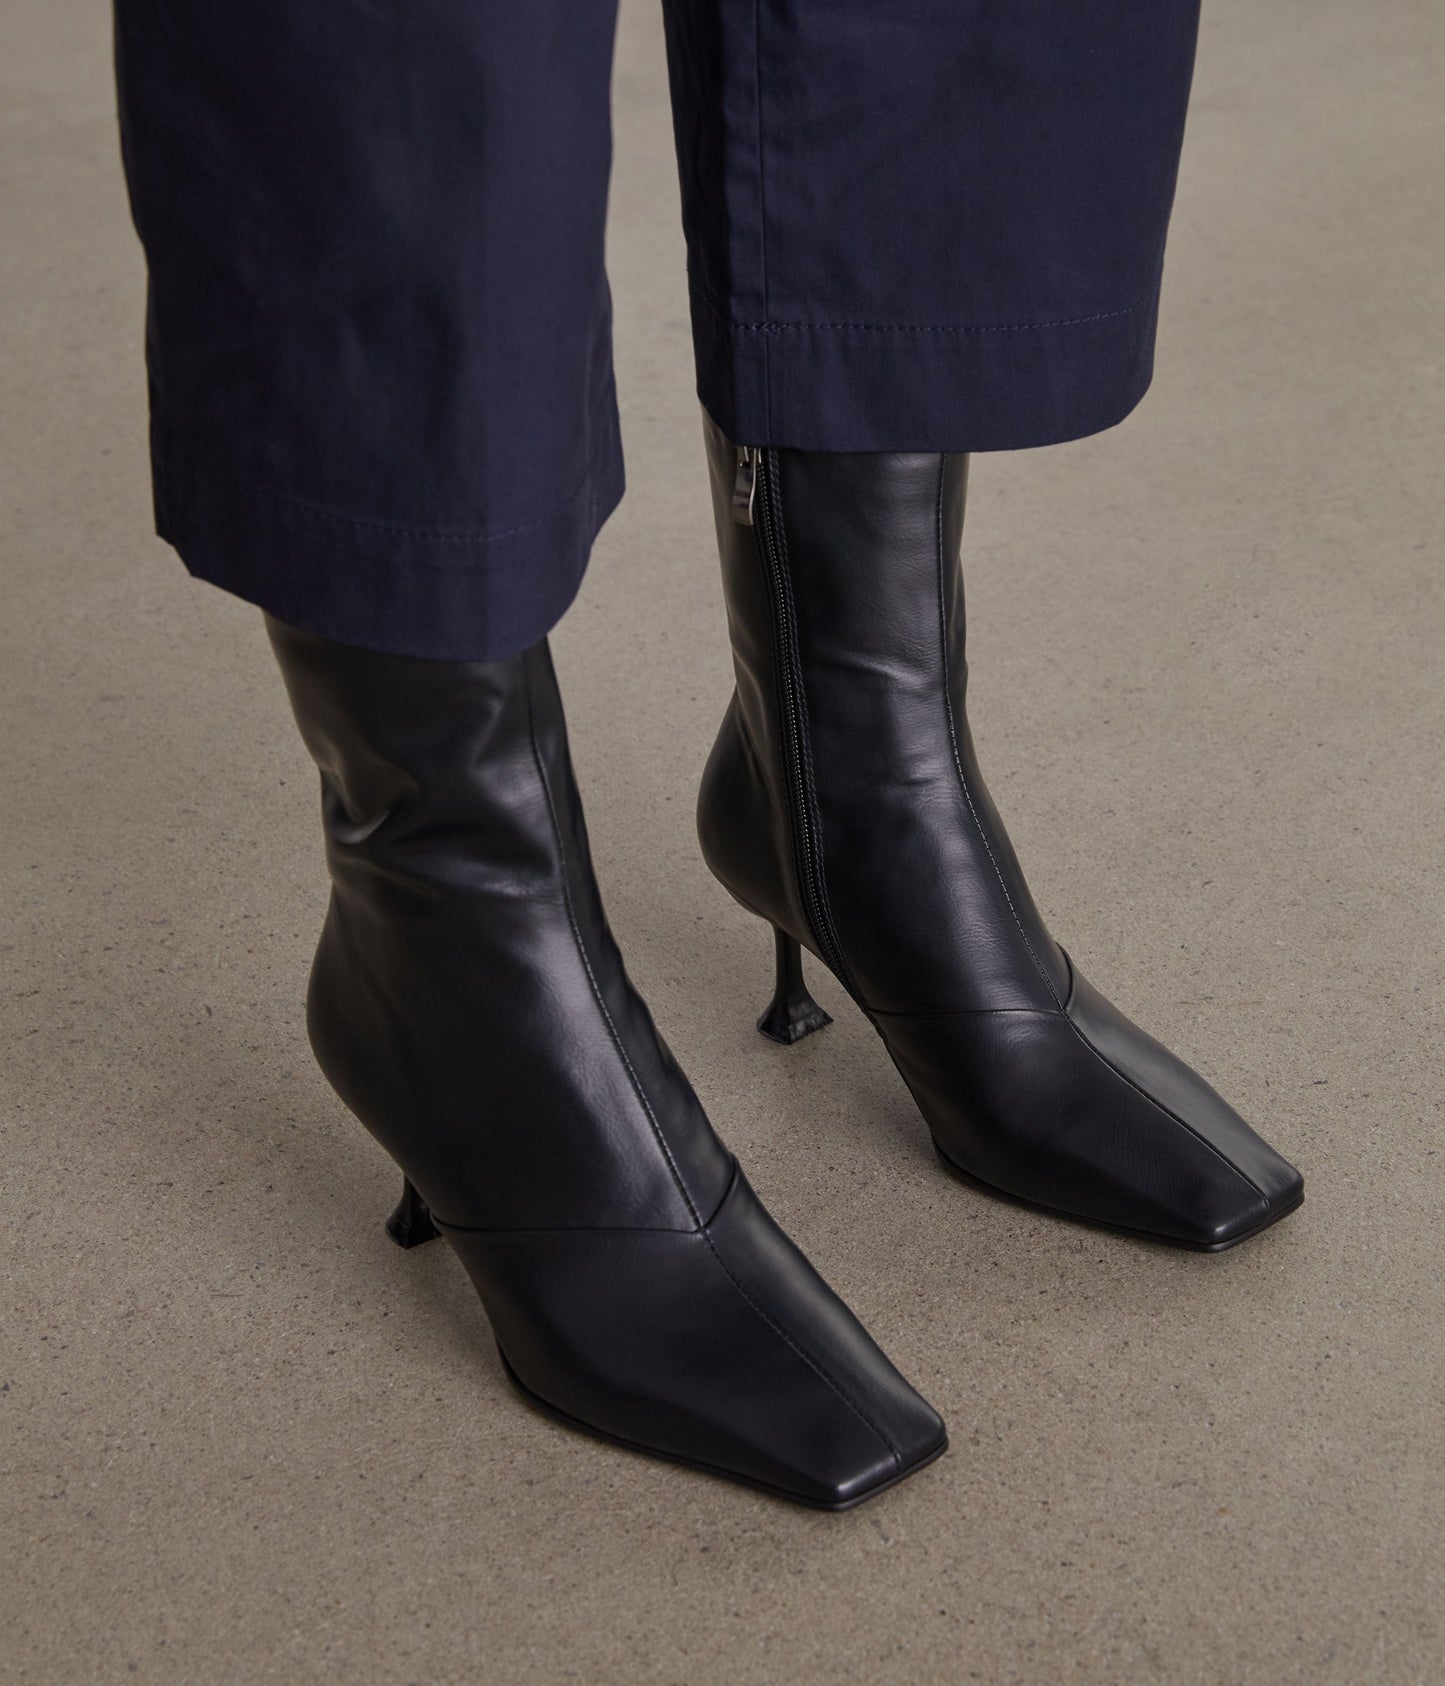 AMOUR Women's Vegan High Heel Boots | Color: Beige - variant::soy